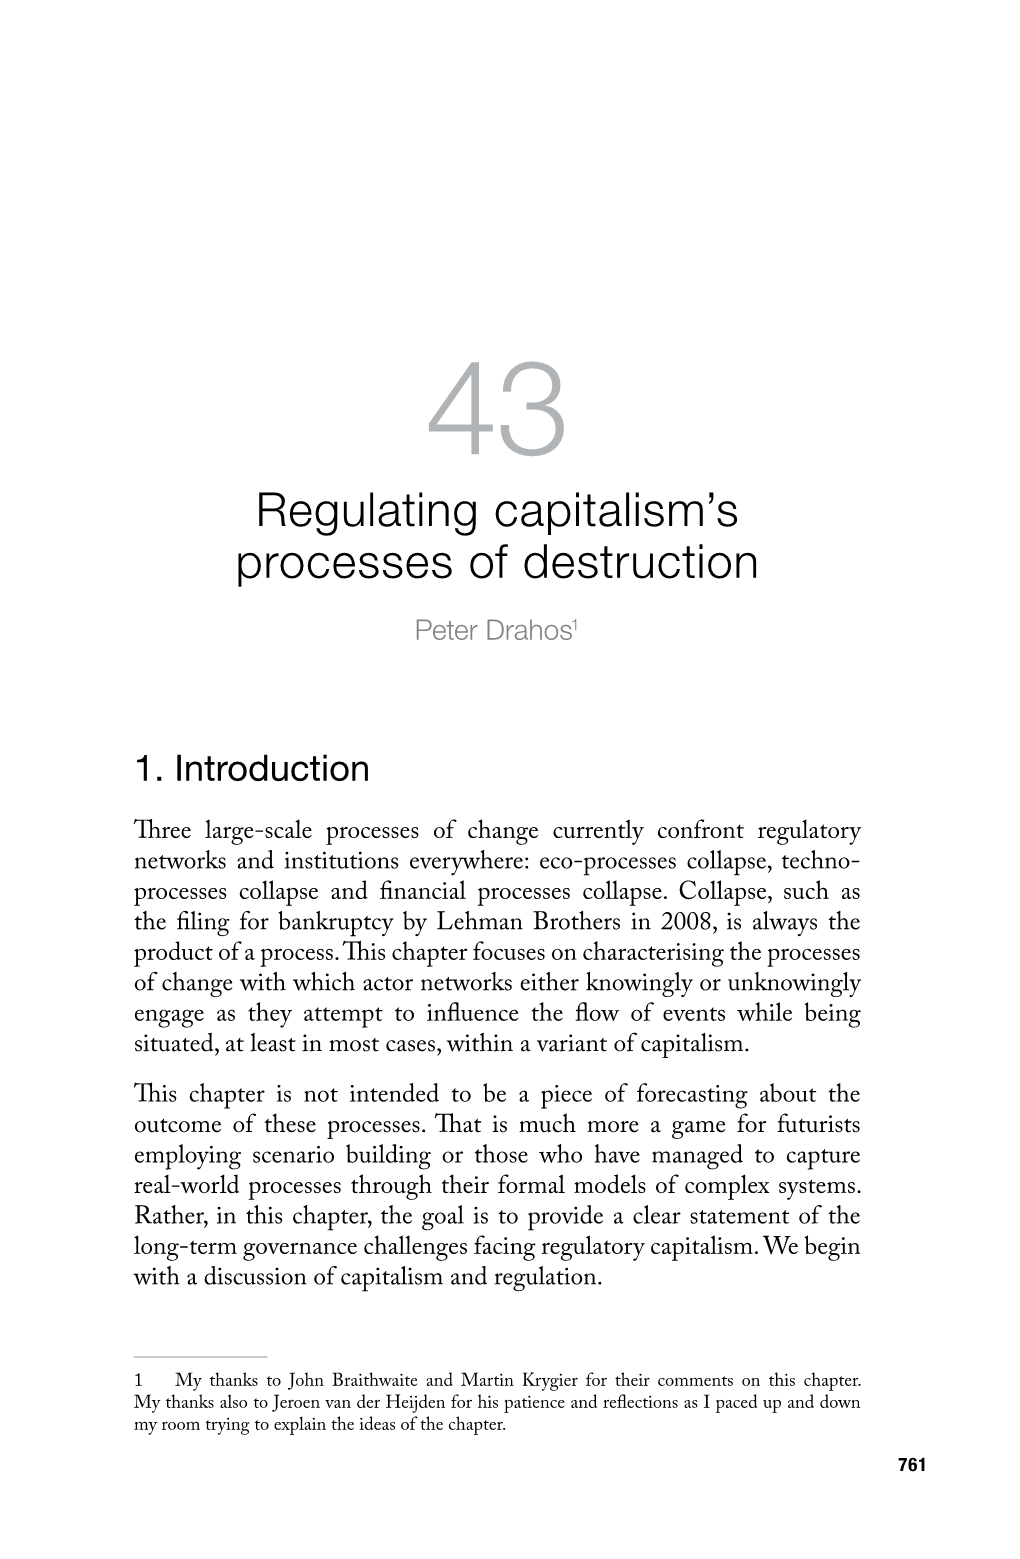 Regulating Capitalism's Processes of Destruction